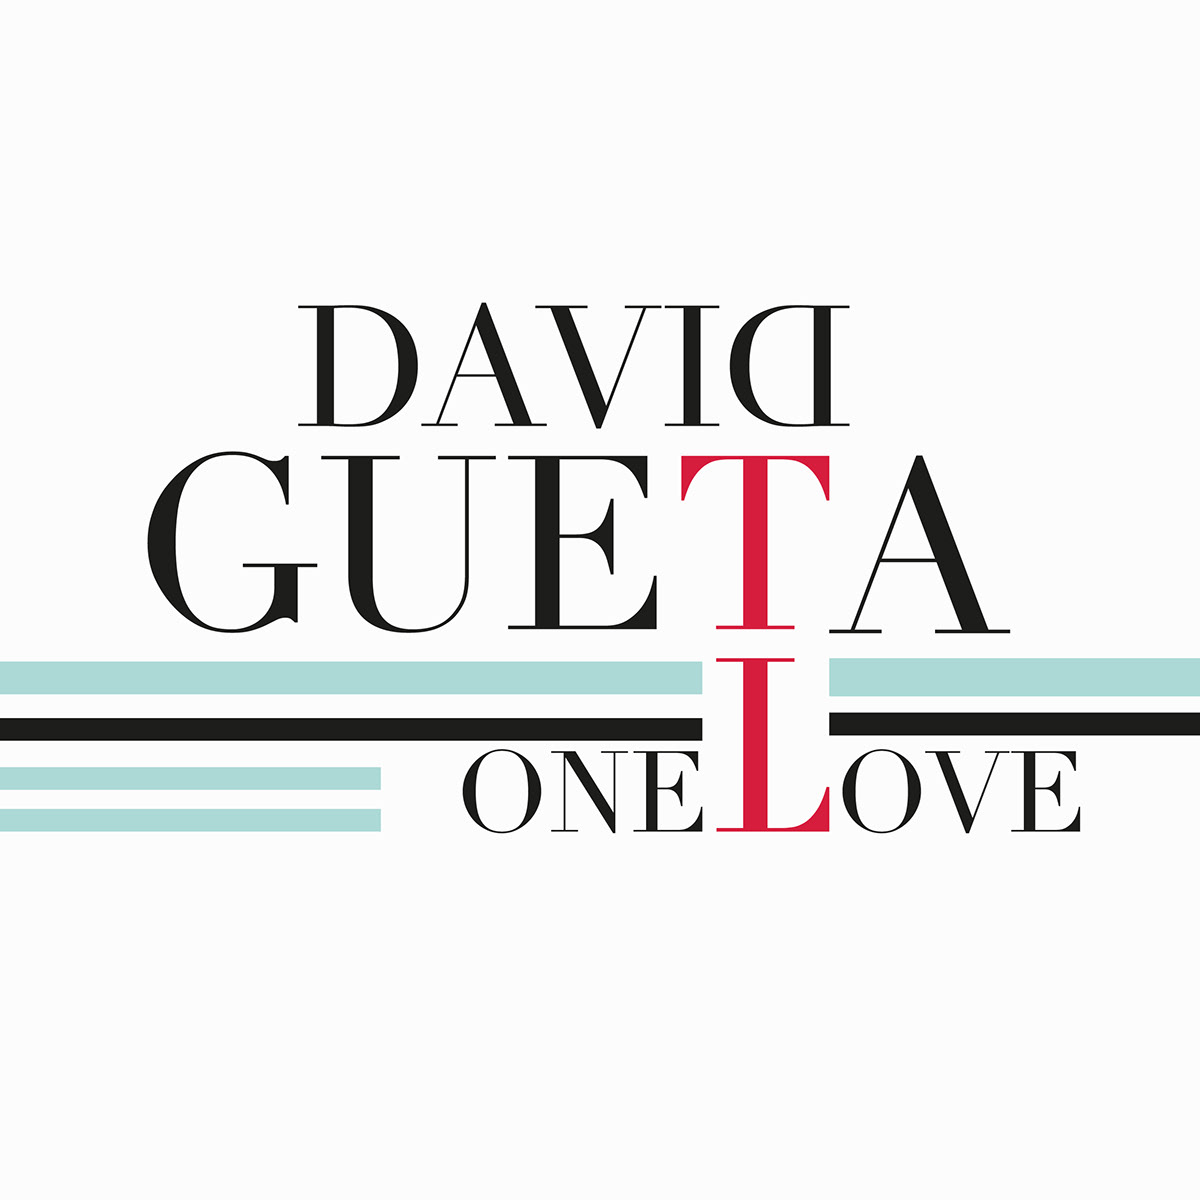 tipografia Typografy digitalart DavidGuetta Singer dj disc songs song stamp record Discus cover covering print